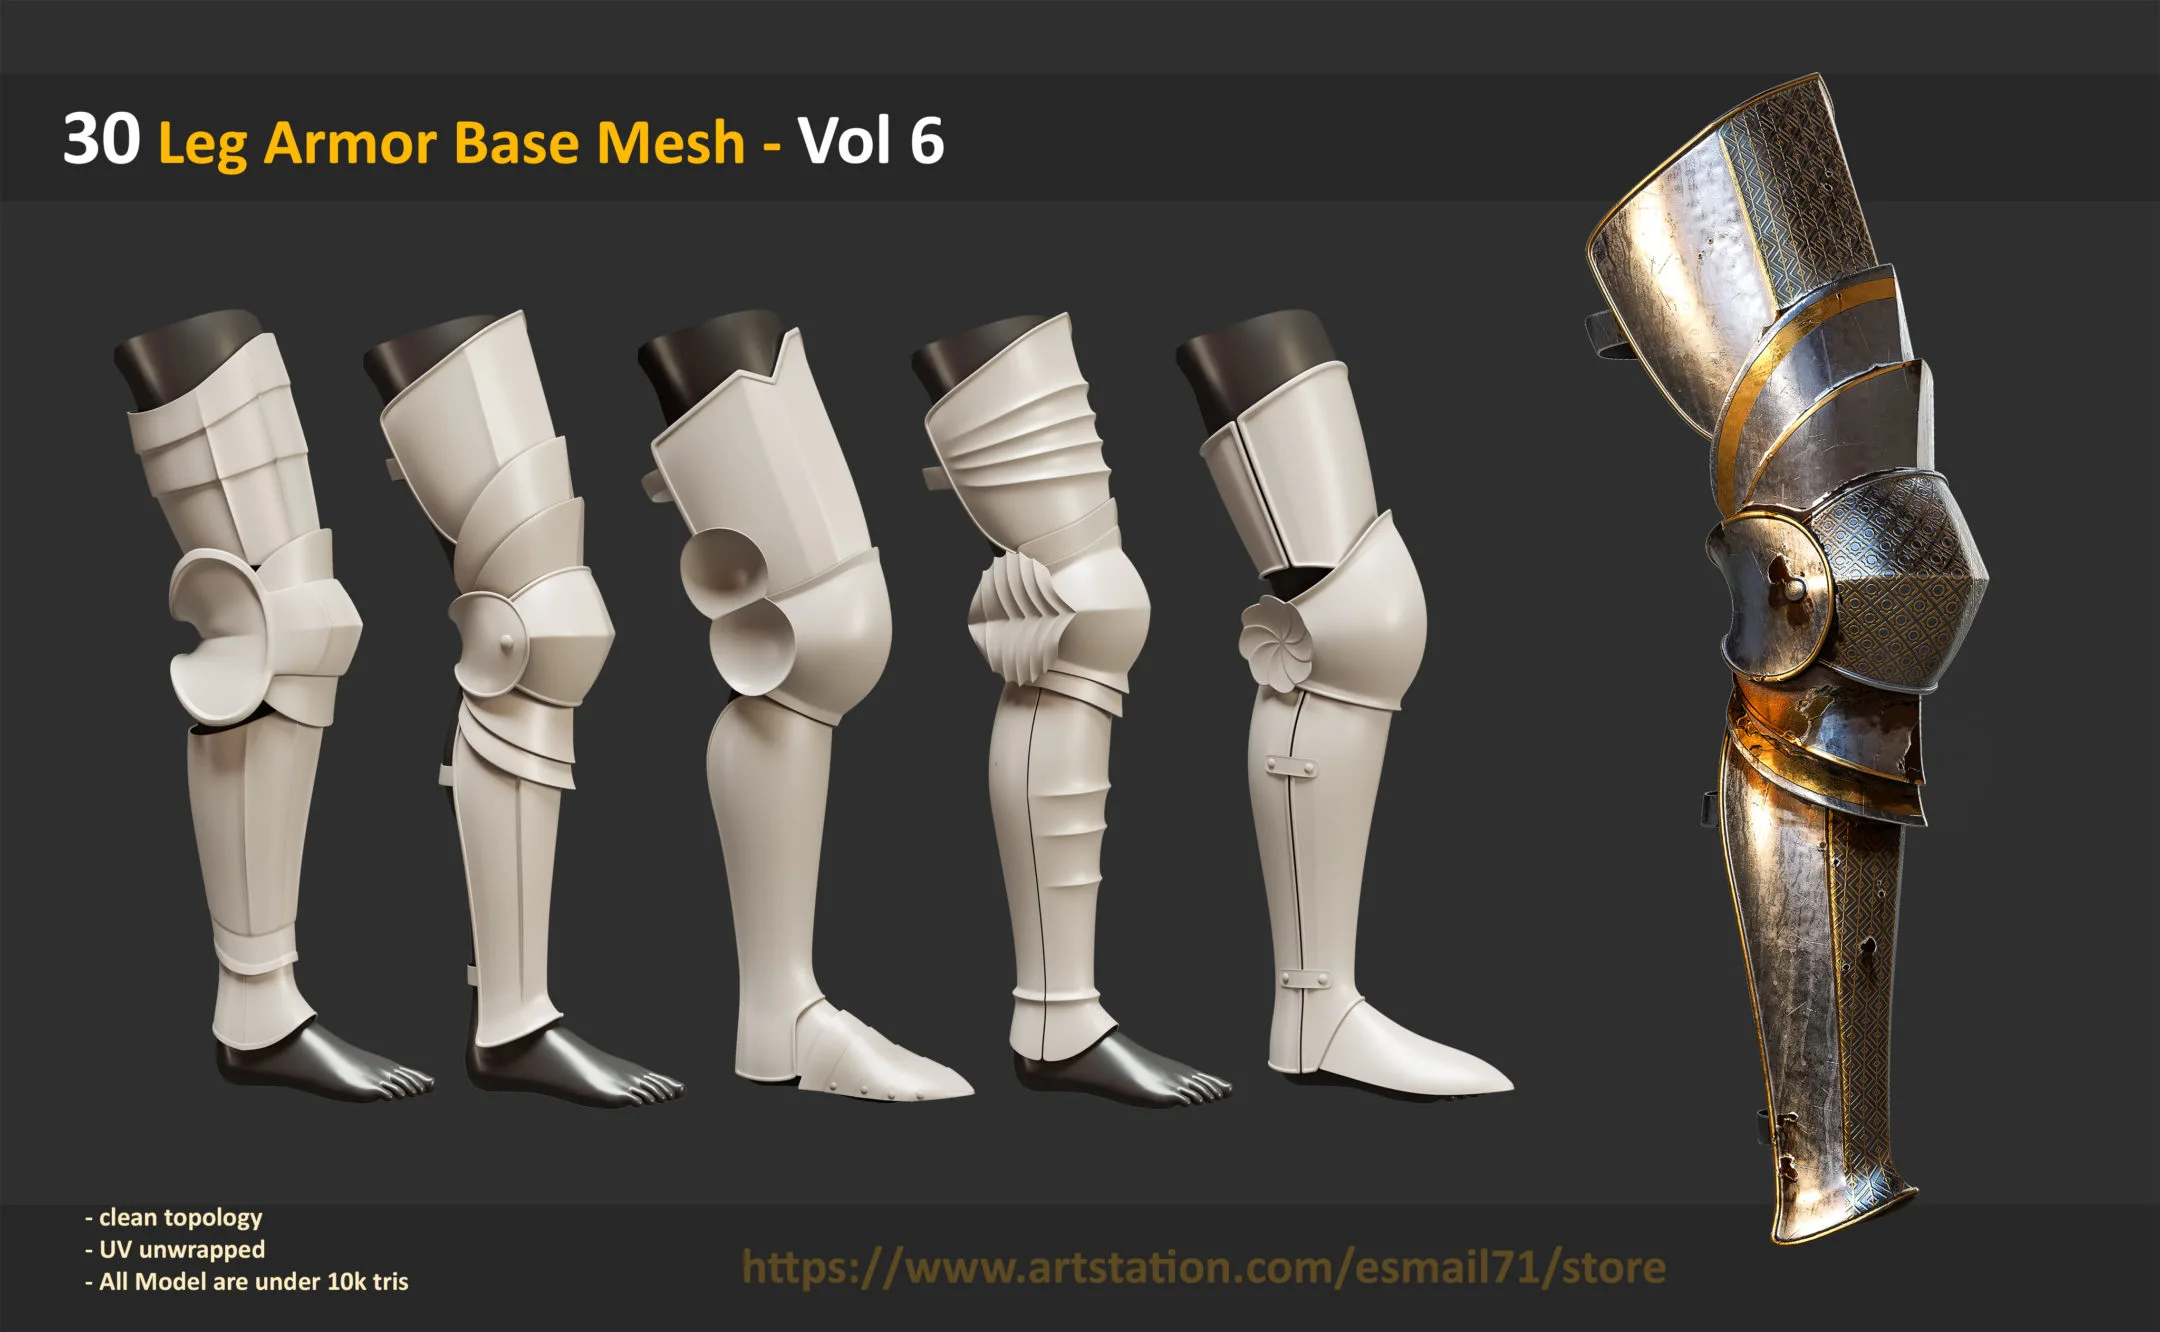 30 Leg Armor Base Mesh - Vol 6